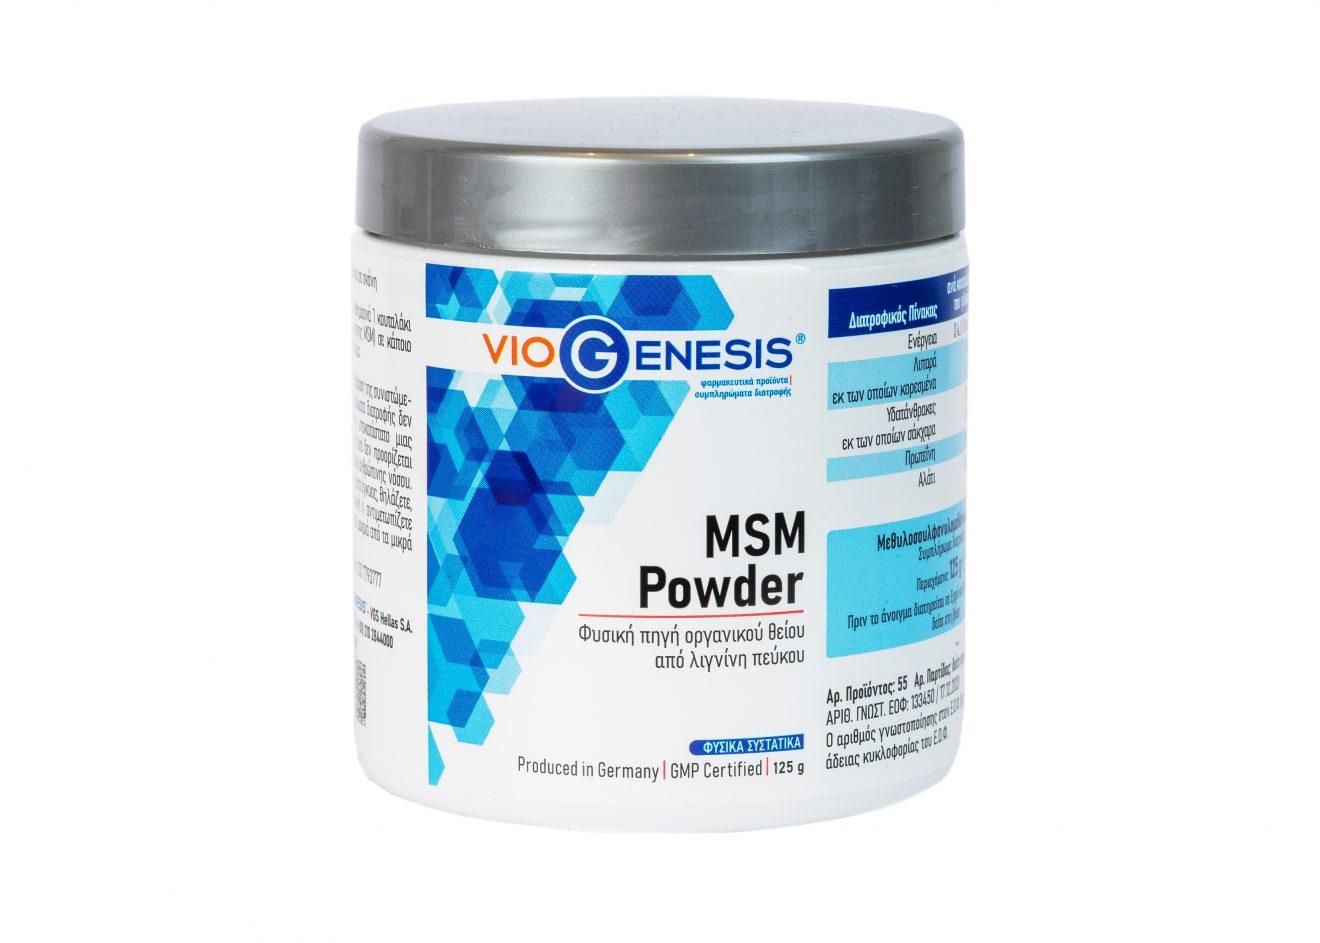 MSM (Methylsulfonylmethan) Powder Viogenesis